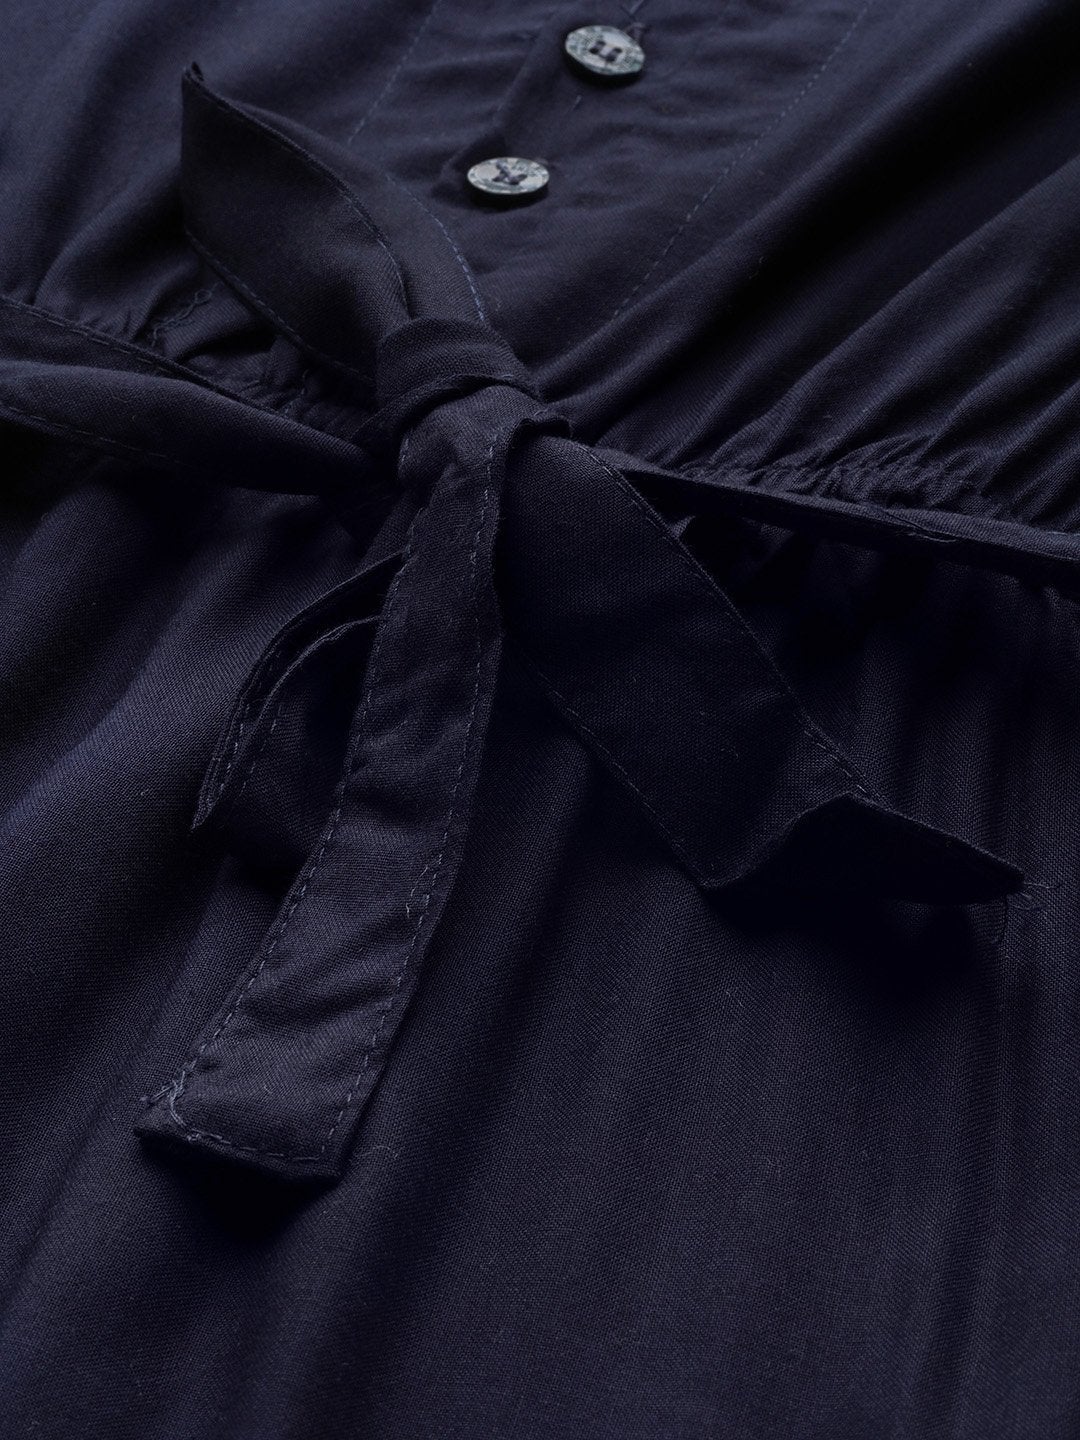 Women's Navy Blue Dress With Belt - InWeave